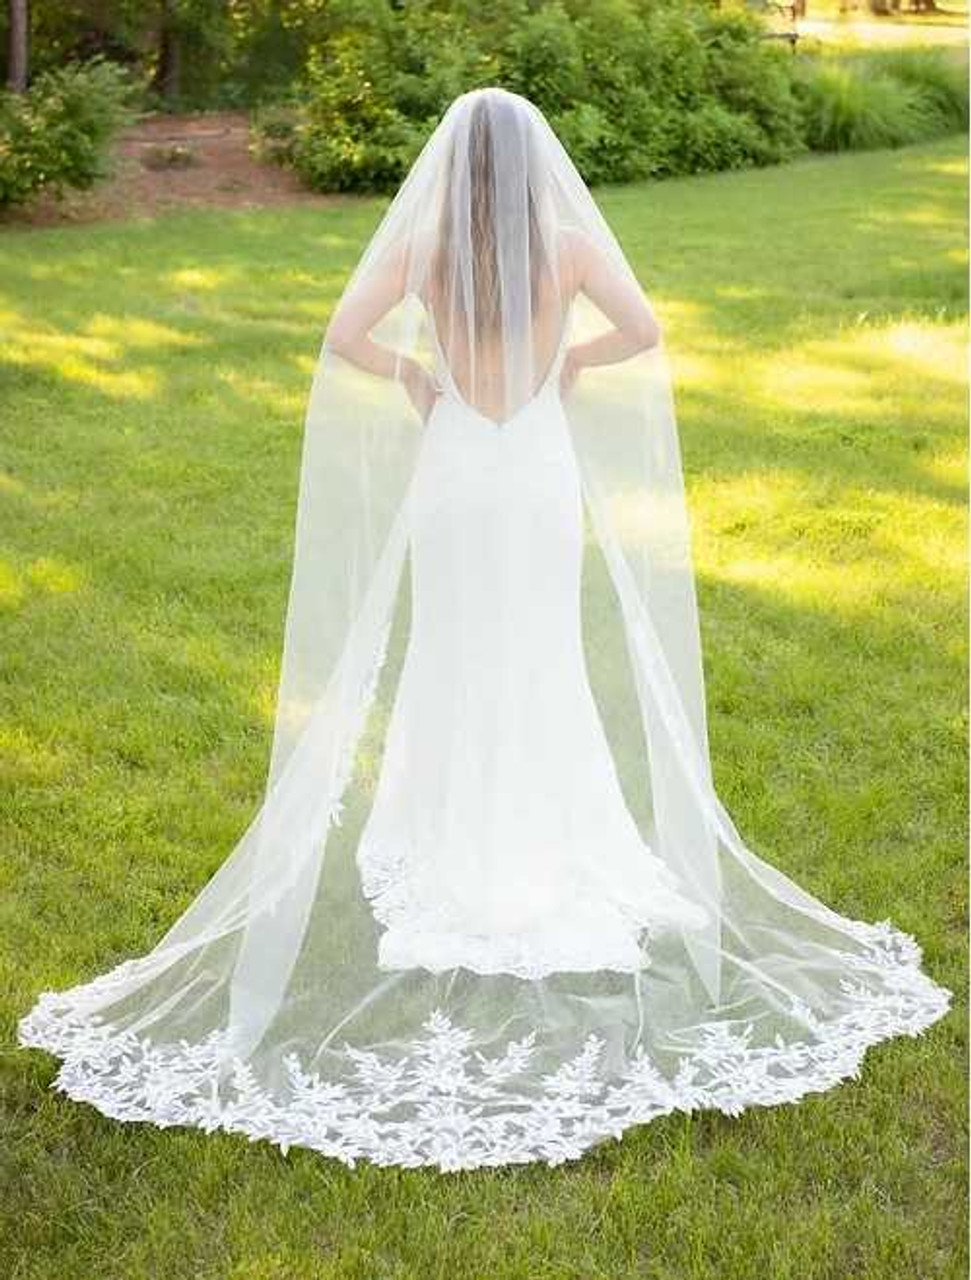 New, Wedding Veil, Lace Edge Hip Length Veil, Laurel Wreath Wedding Veil, Champagne Veil with Ivory Lace